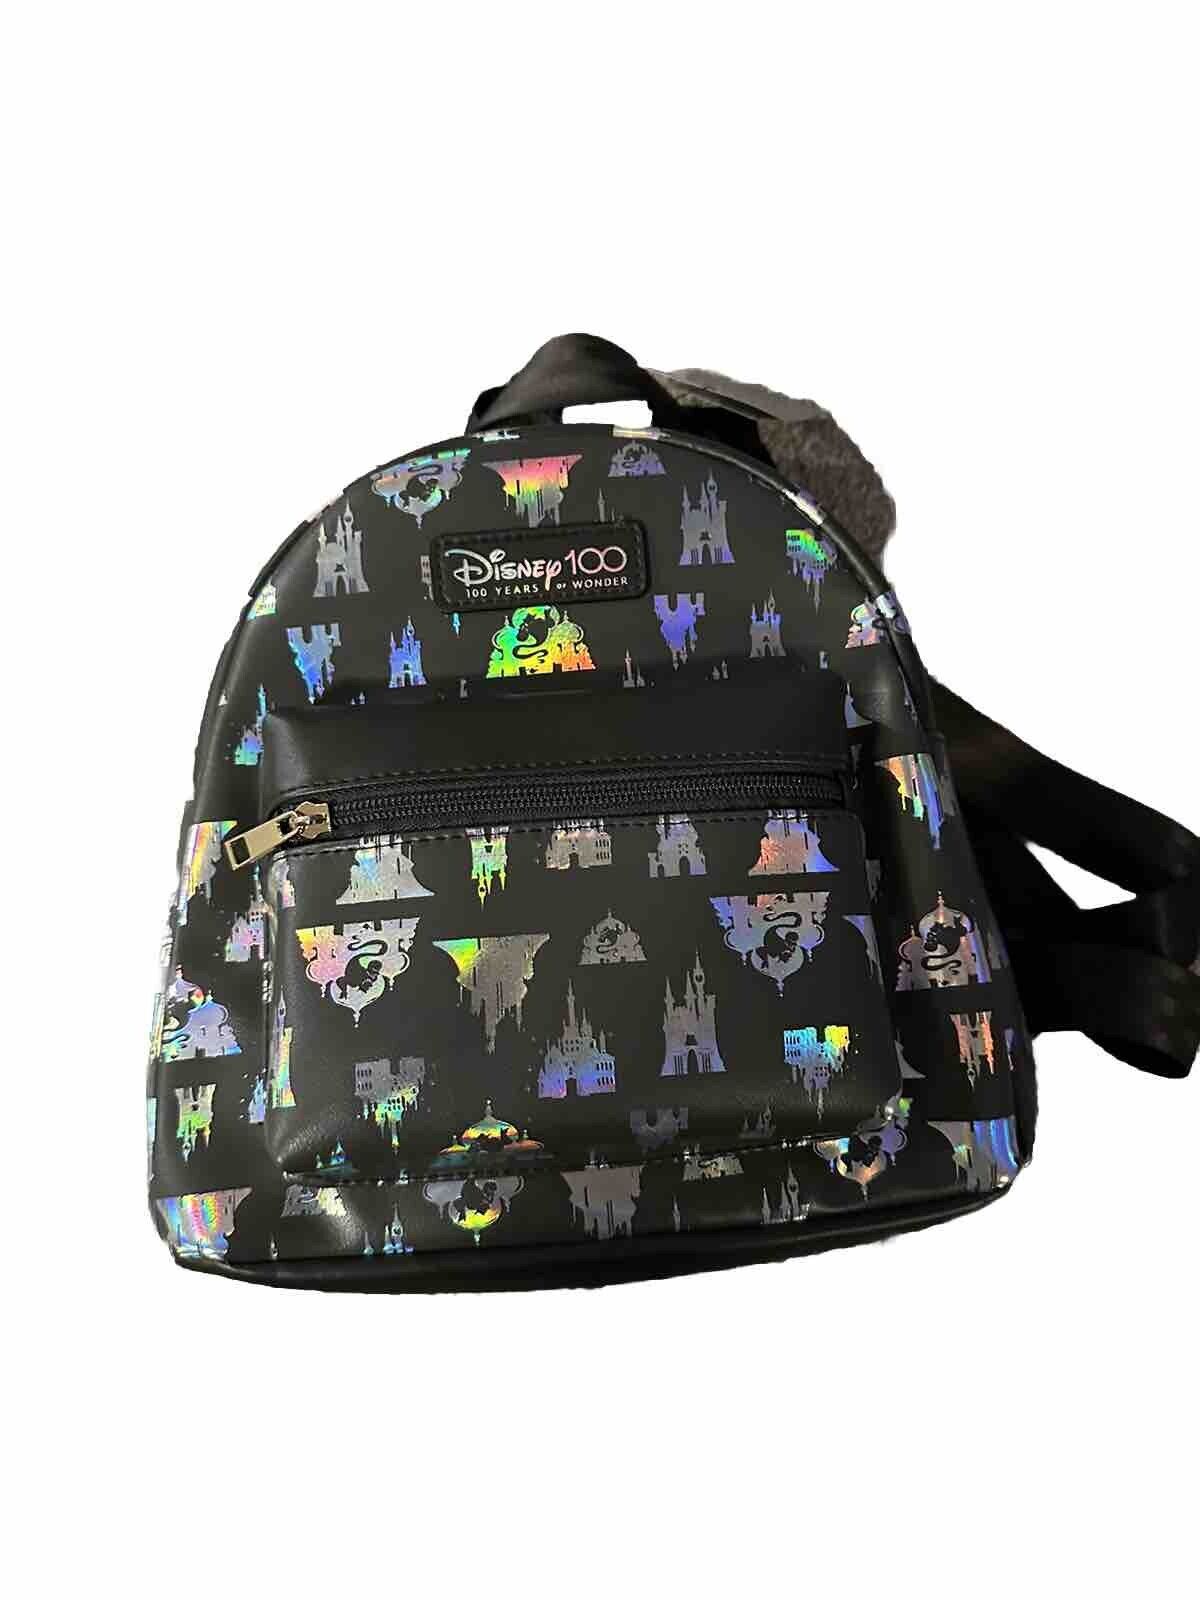 Disney Castle Hologram Mini Backpack NWT Disney 100 Year Anniversary NWT